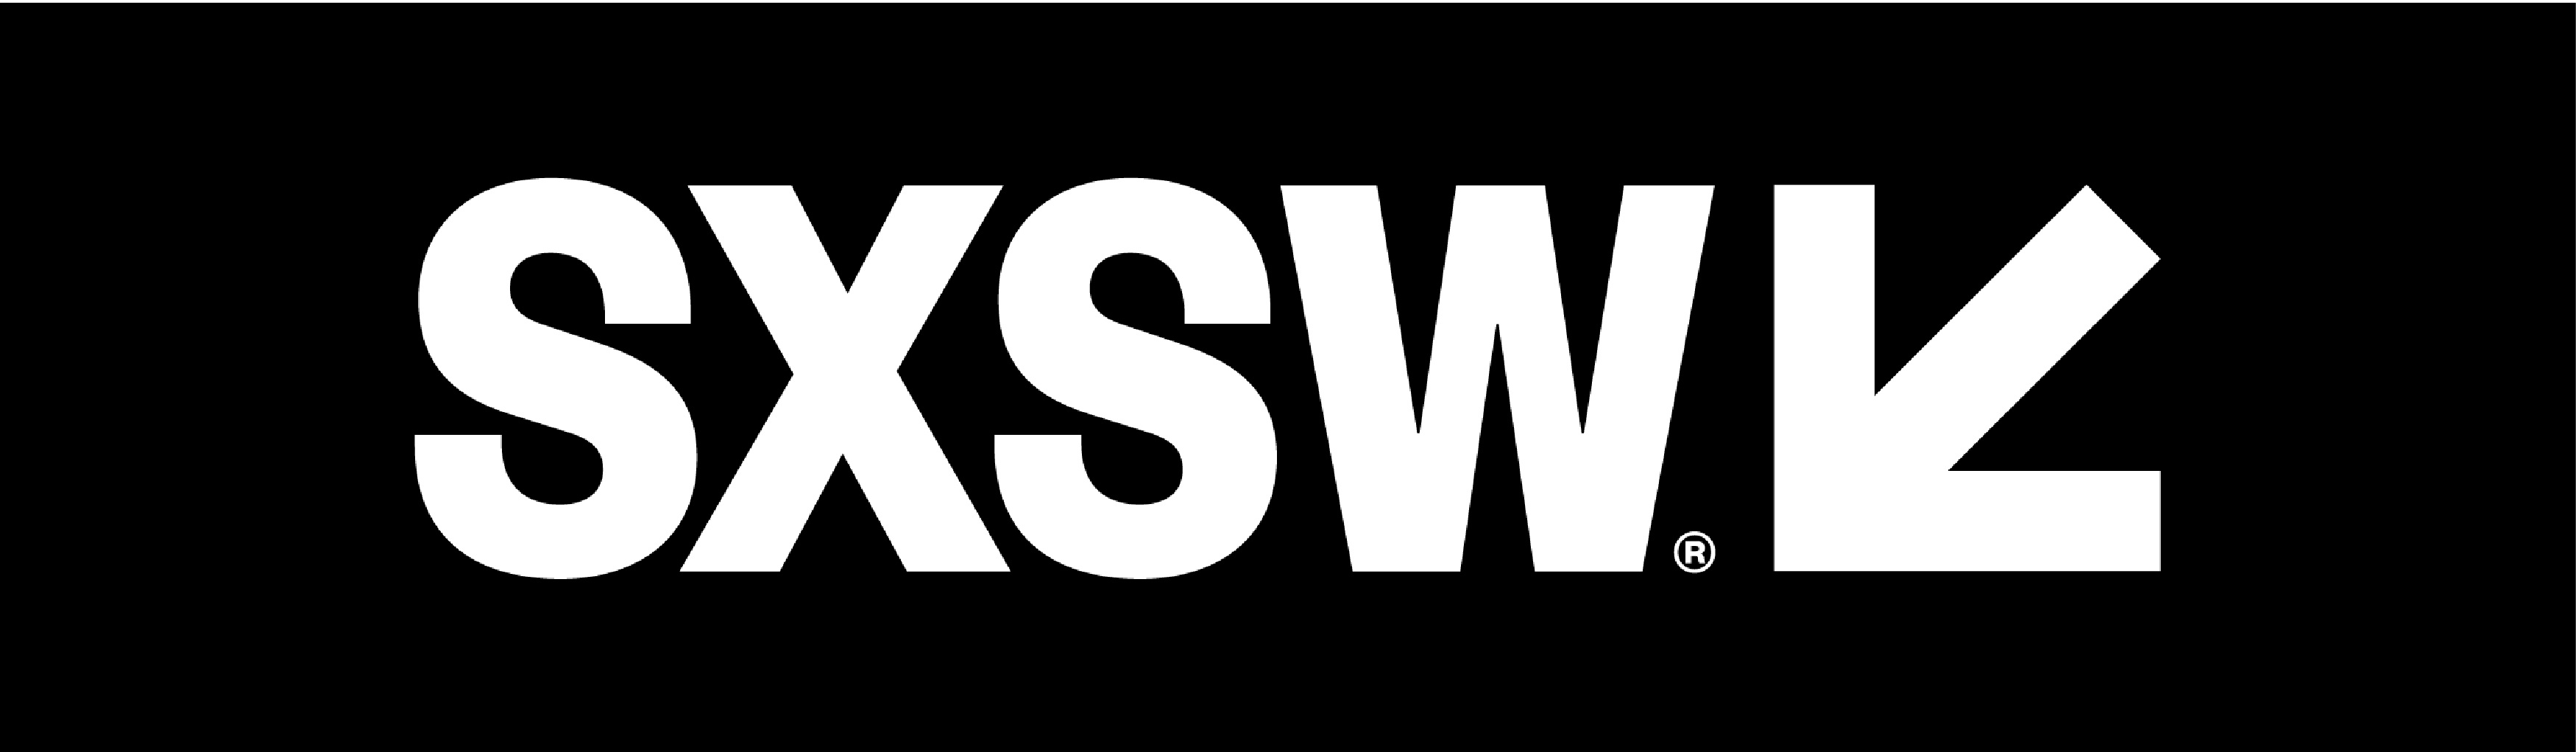 SXSW Music Festival Third Round of Showcasing Artists Announced